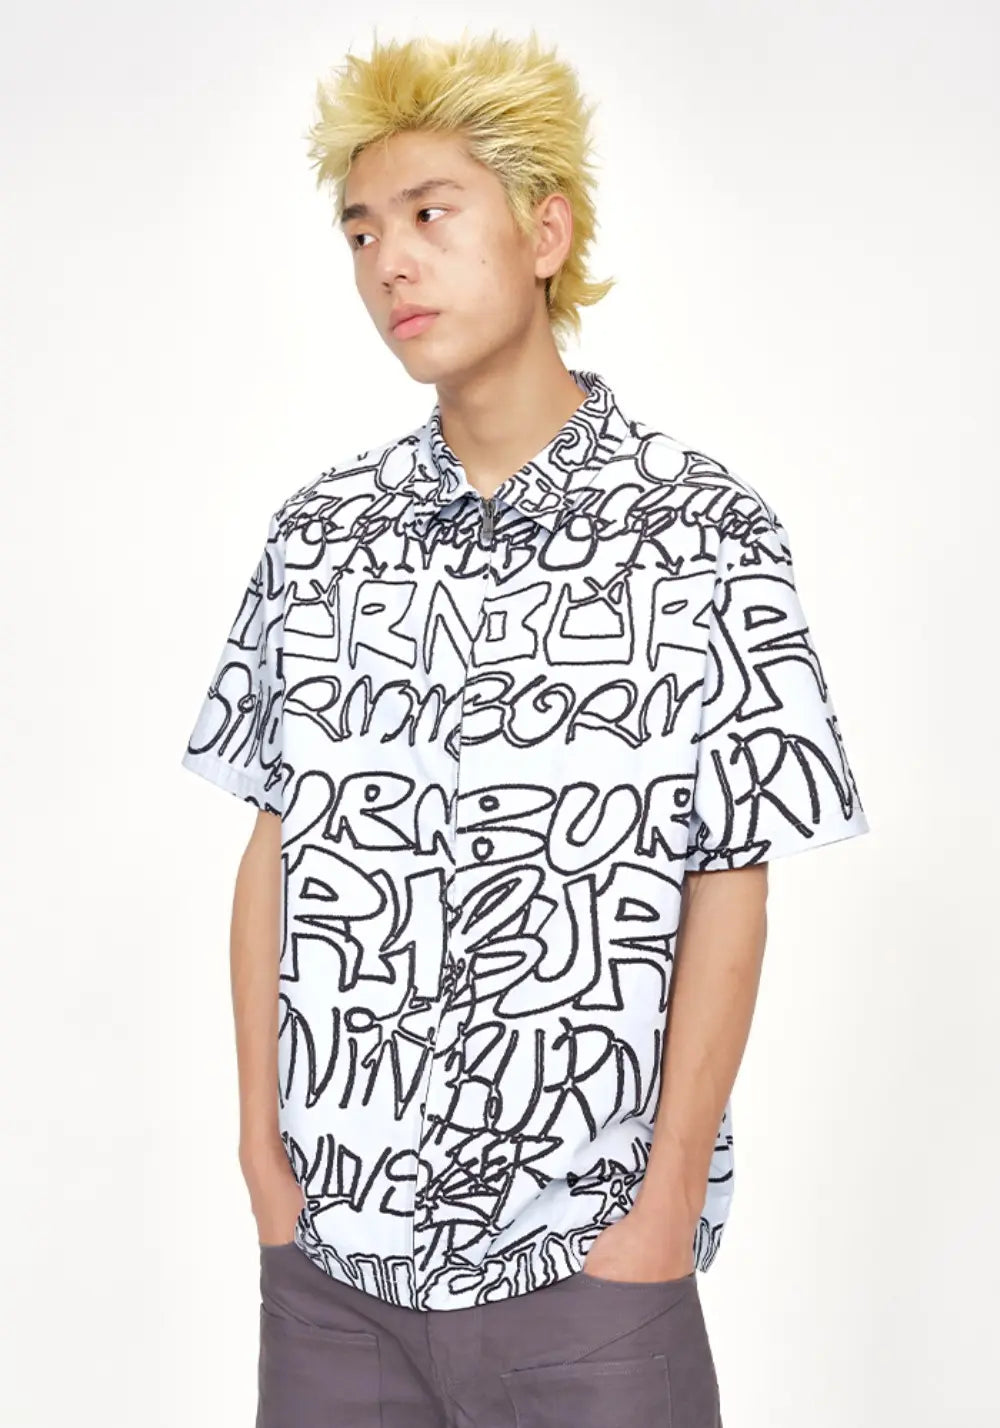 Short-Sleeved Shirt With Full Graffiti Font - PSYLOS 1, Short-Sleeved Shirt With Full Graffiti Font, Shorts, Burnin, PSYLOS 1